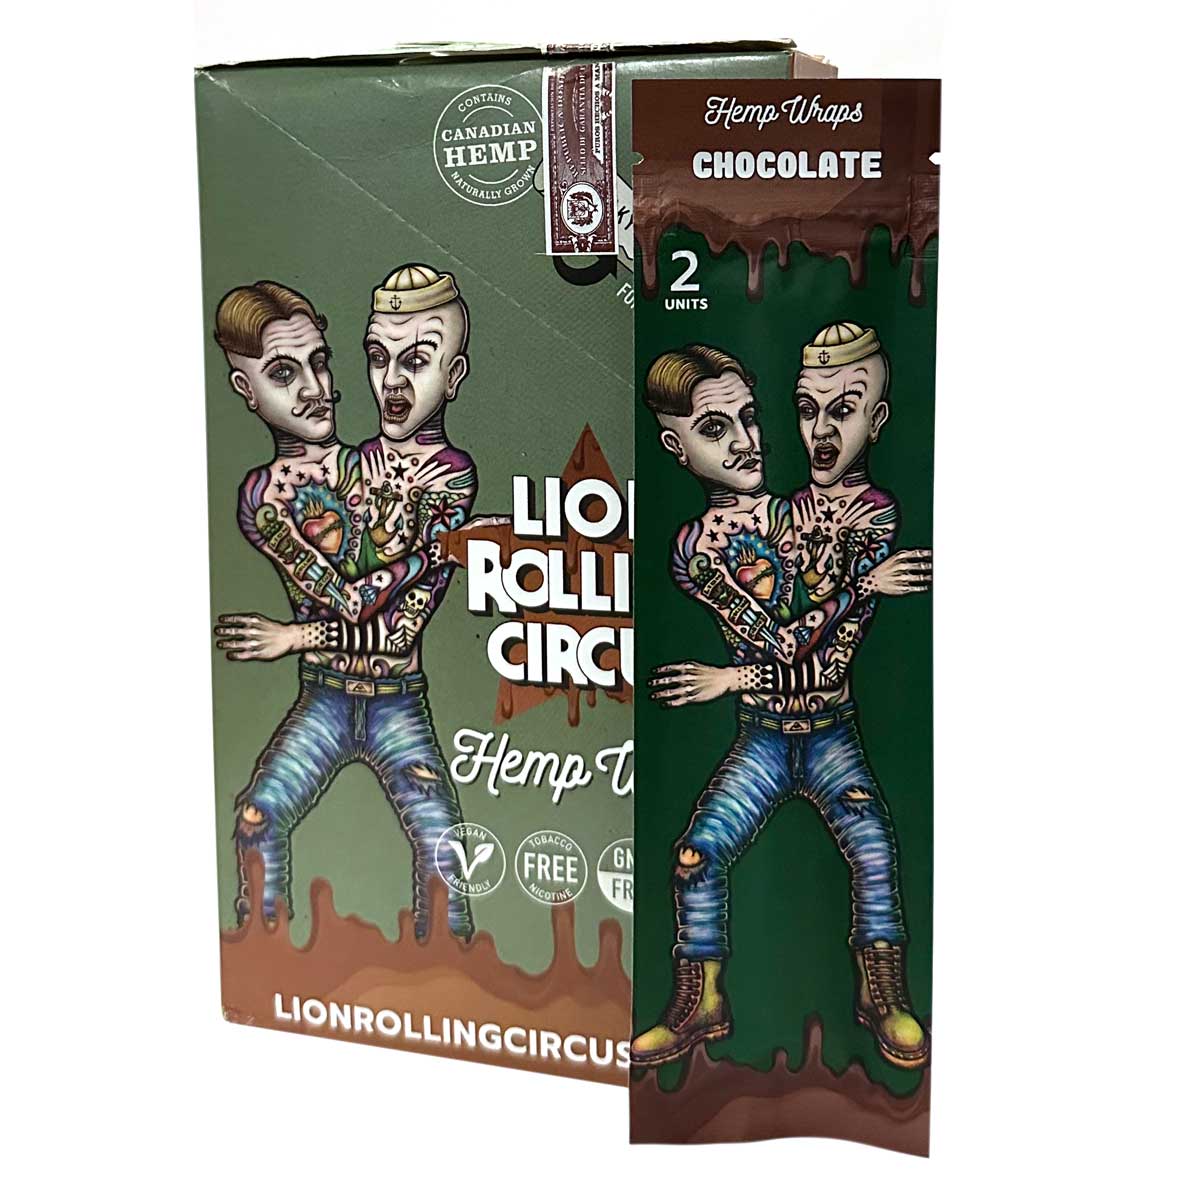 Lion Rolling Circus Hemp Wraps - Chocolate Flavor